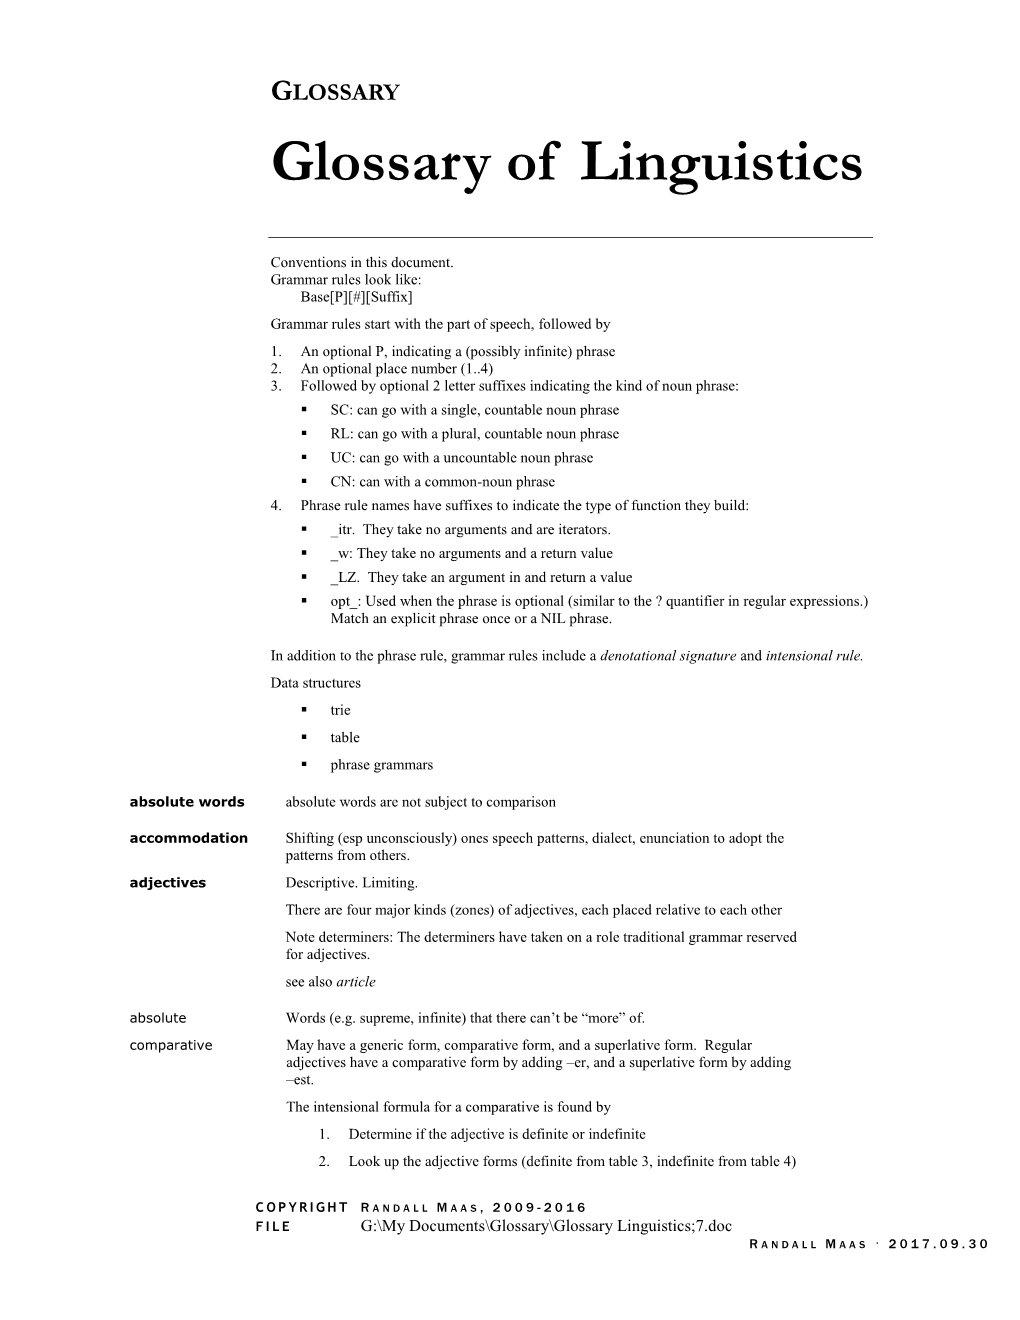 Glossary of Linguistics